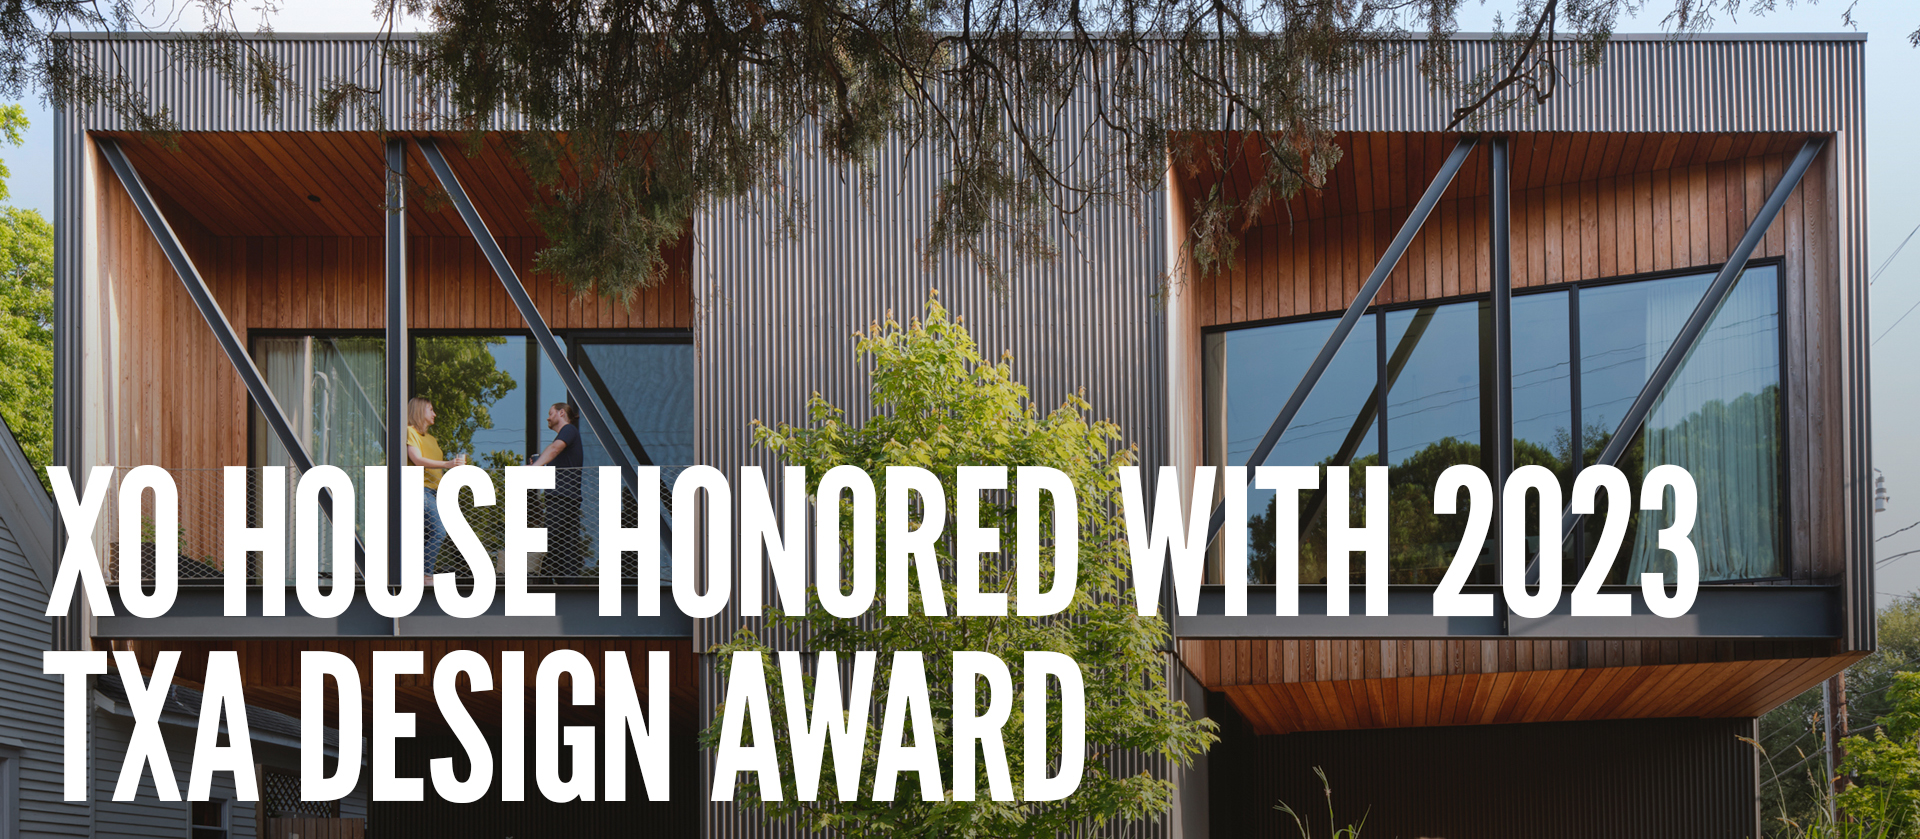 XO House Honored with 2023 TxA Design Award